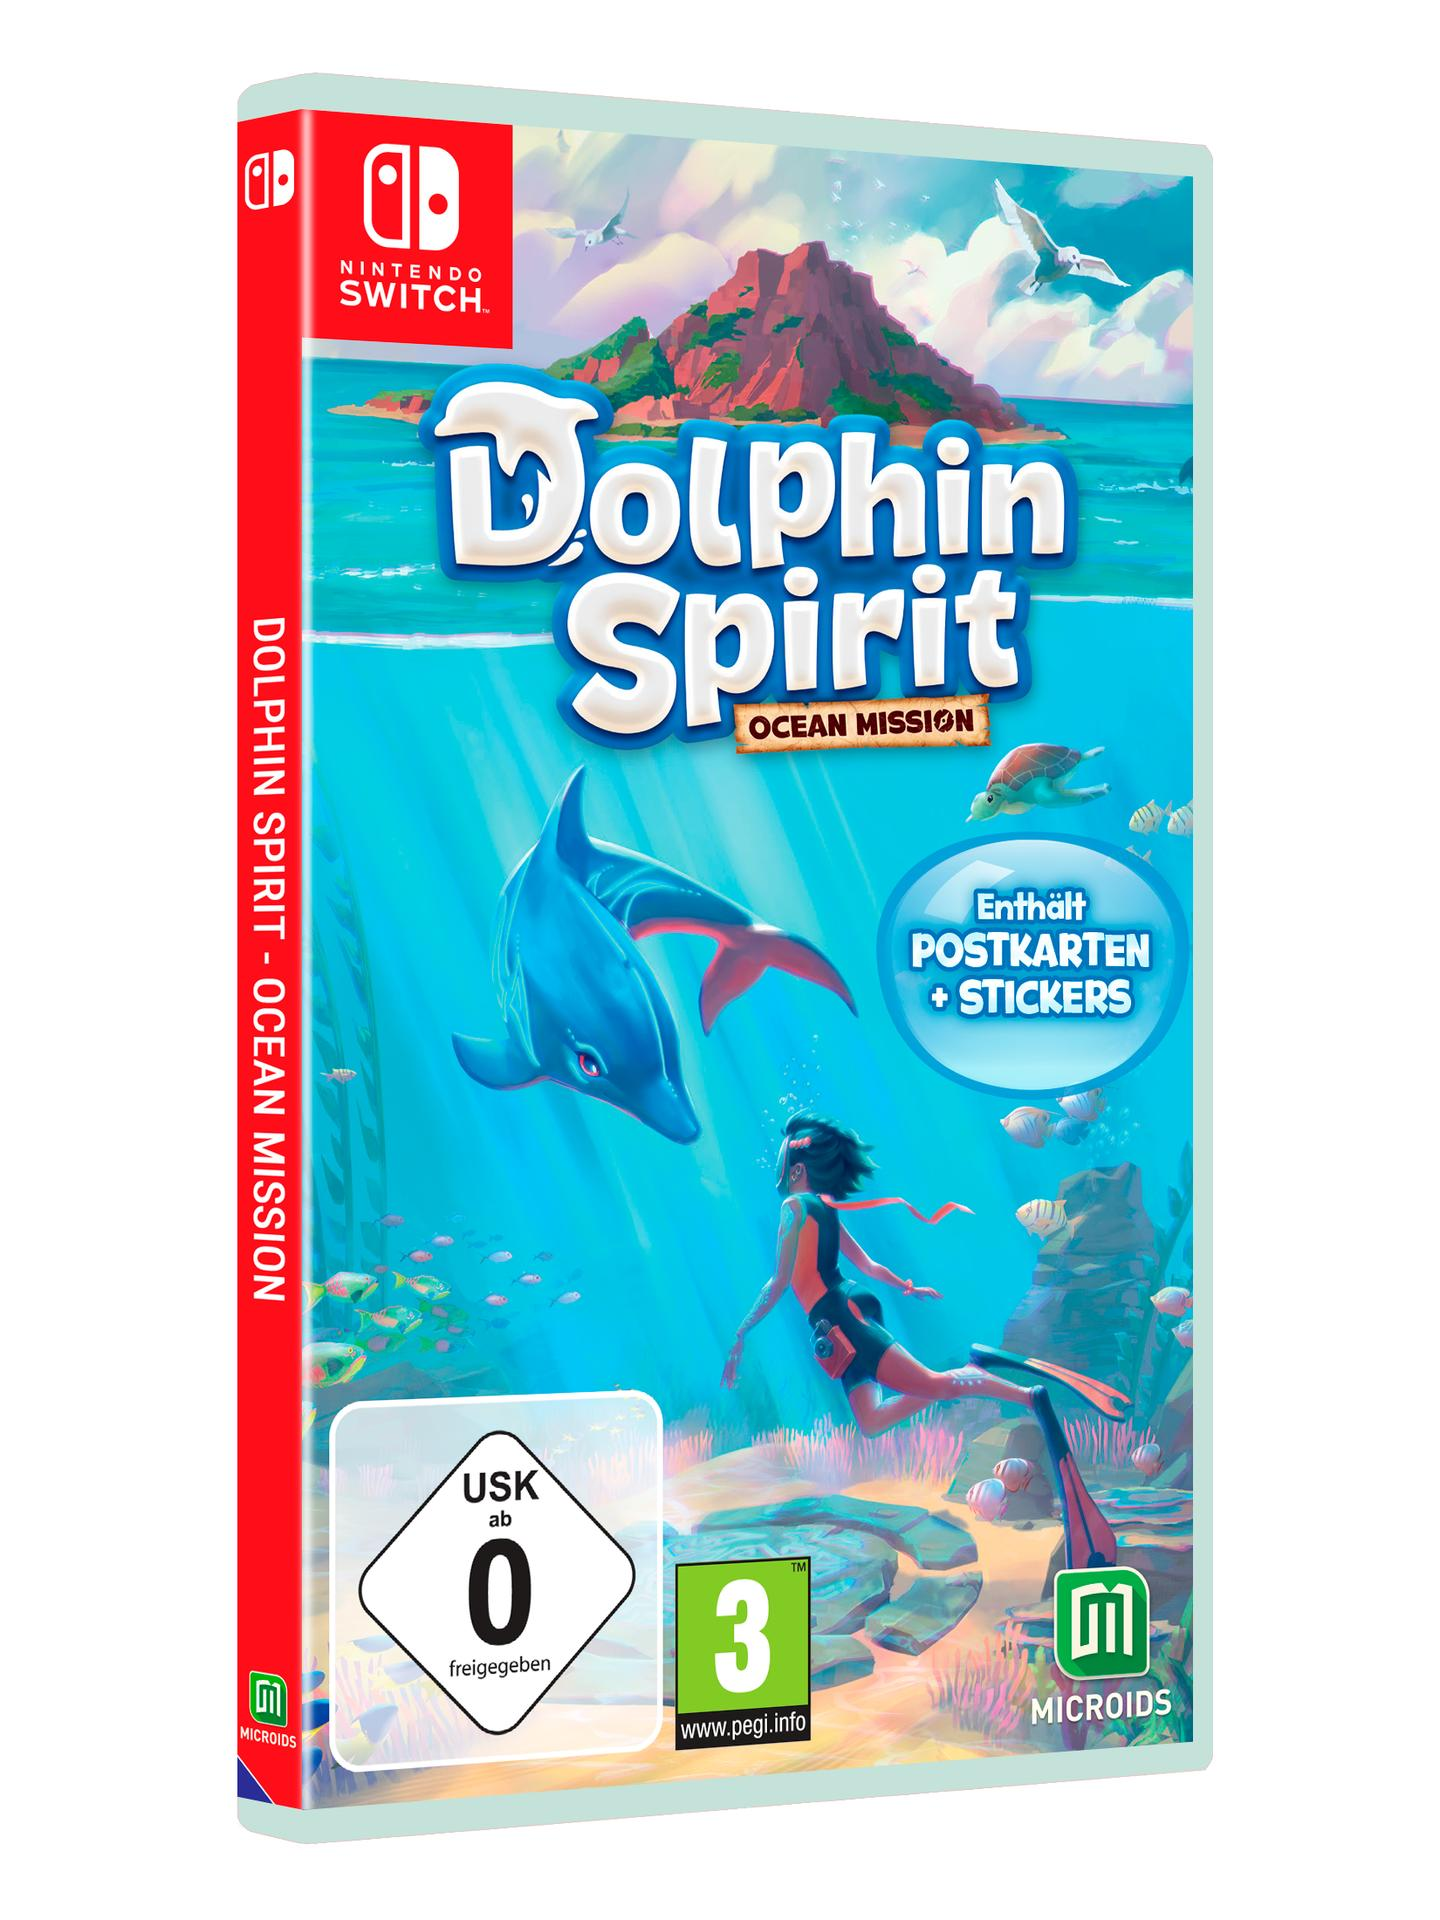 Switch] Dolphin Spirit: Mission Ocean [Nintendo -